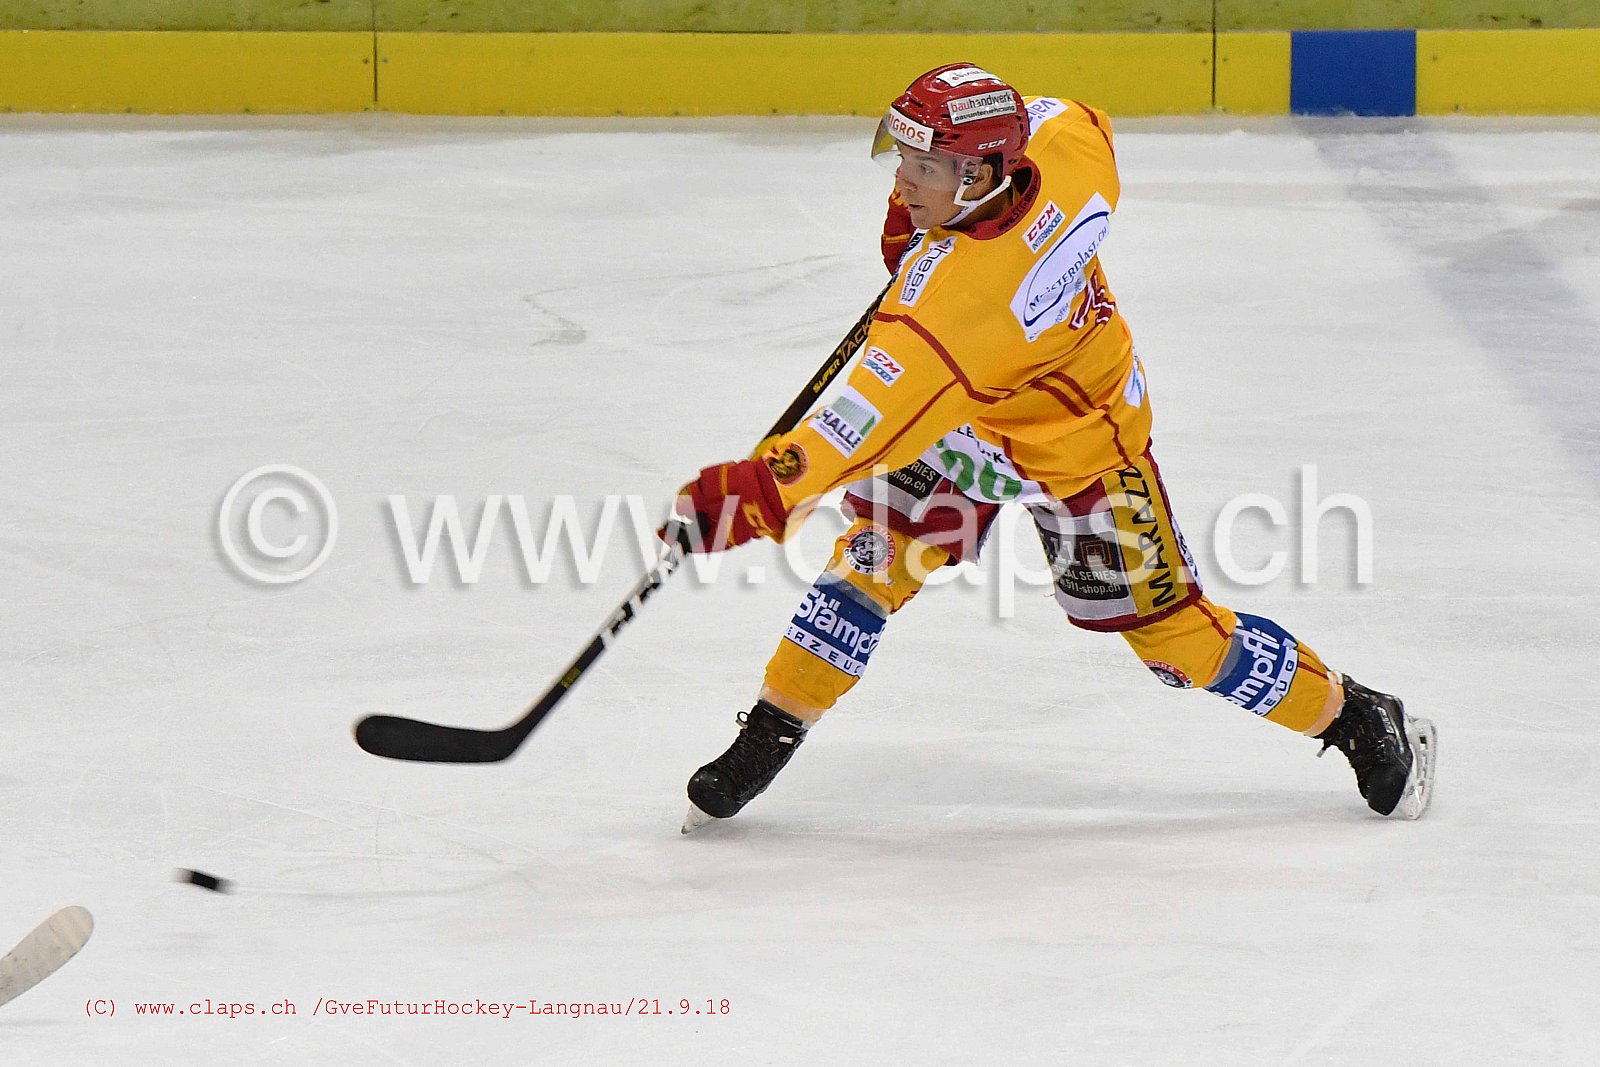 GSHC_FuturHockey_Langnau